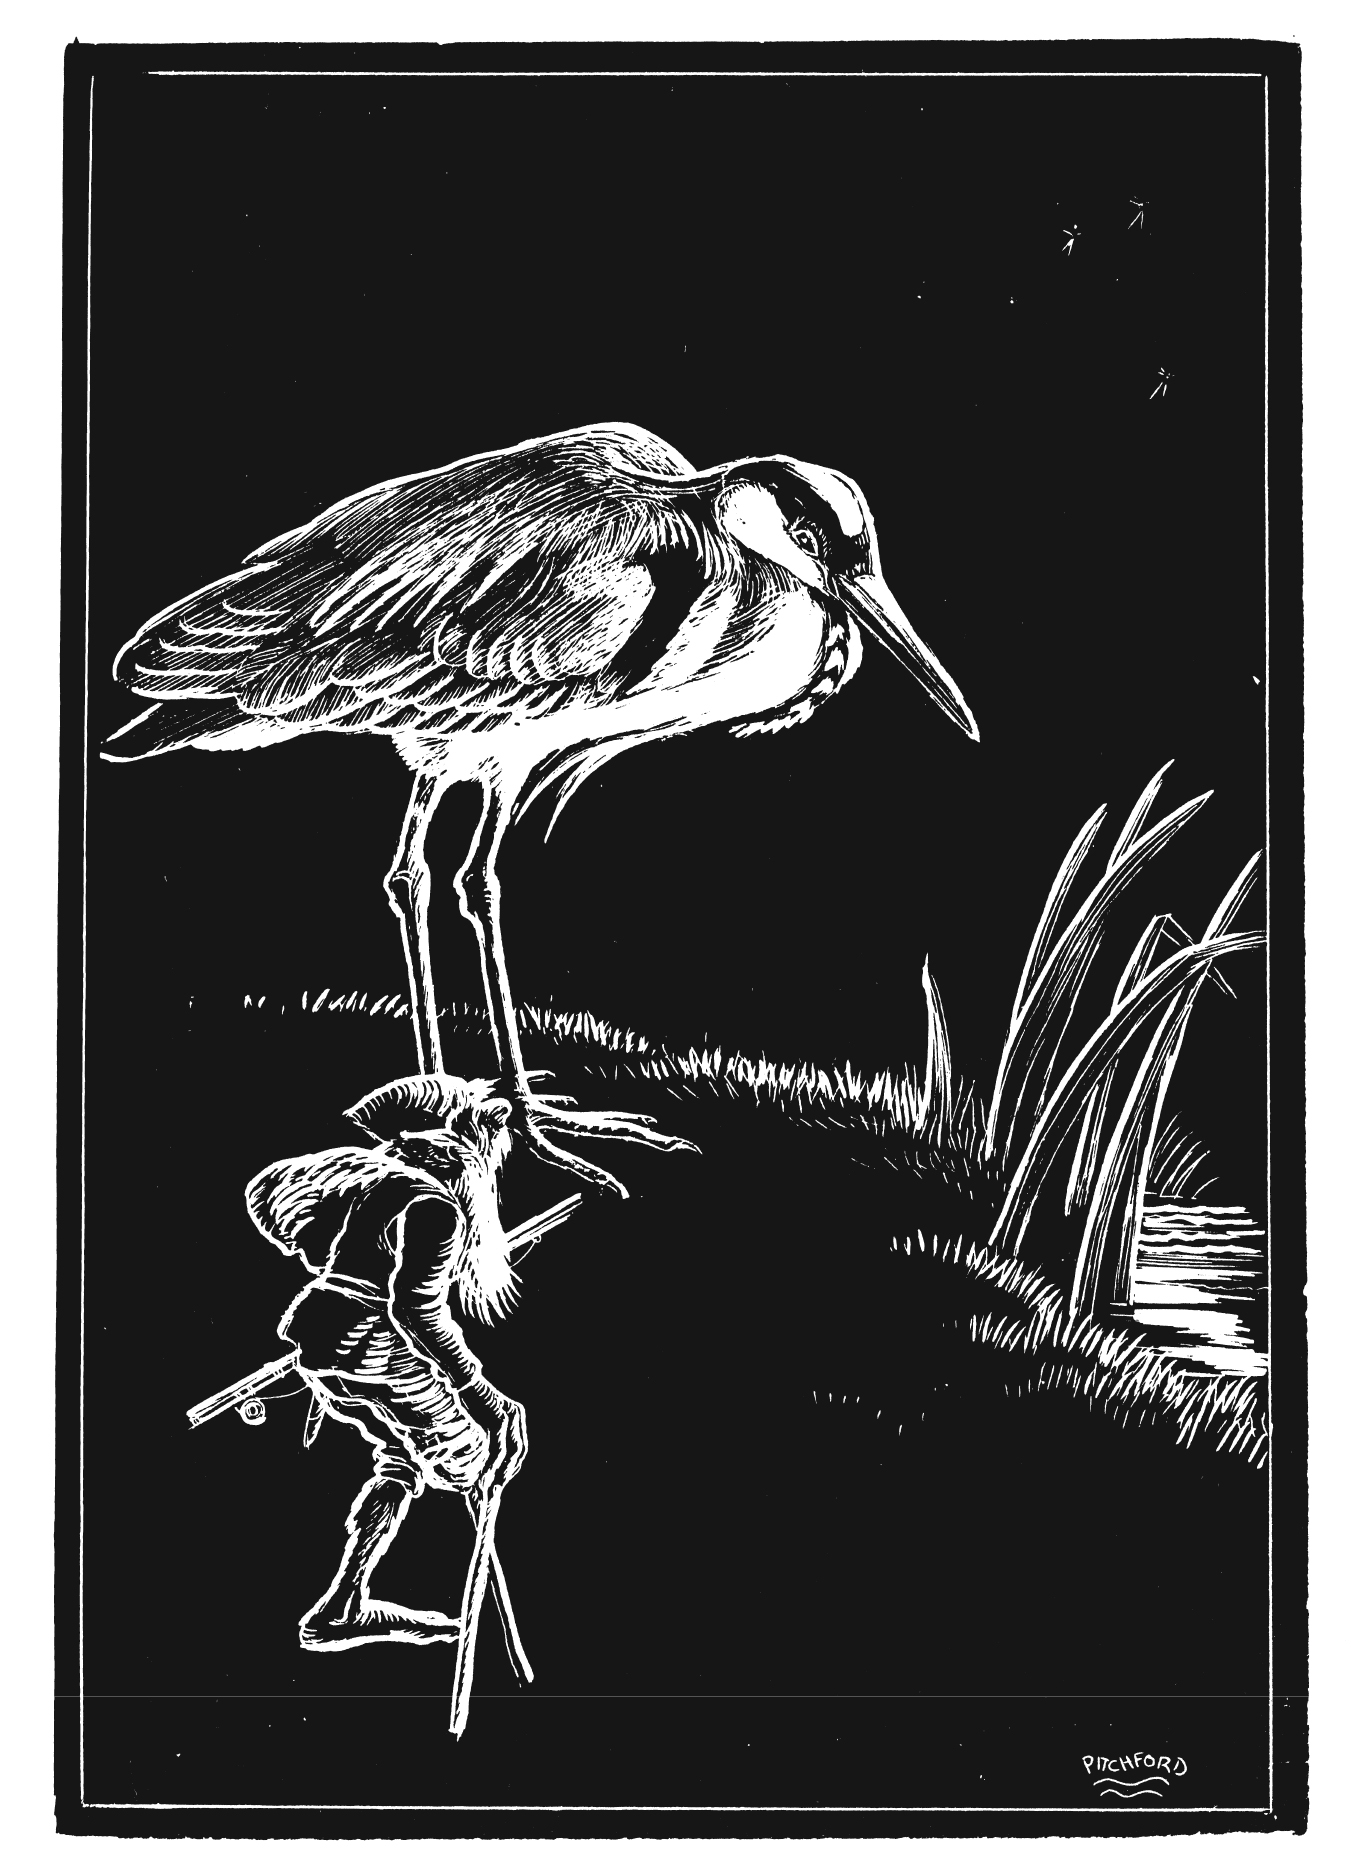 Barn Owl illustration by Neil Gower